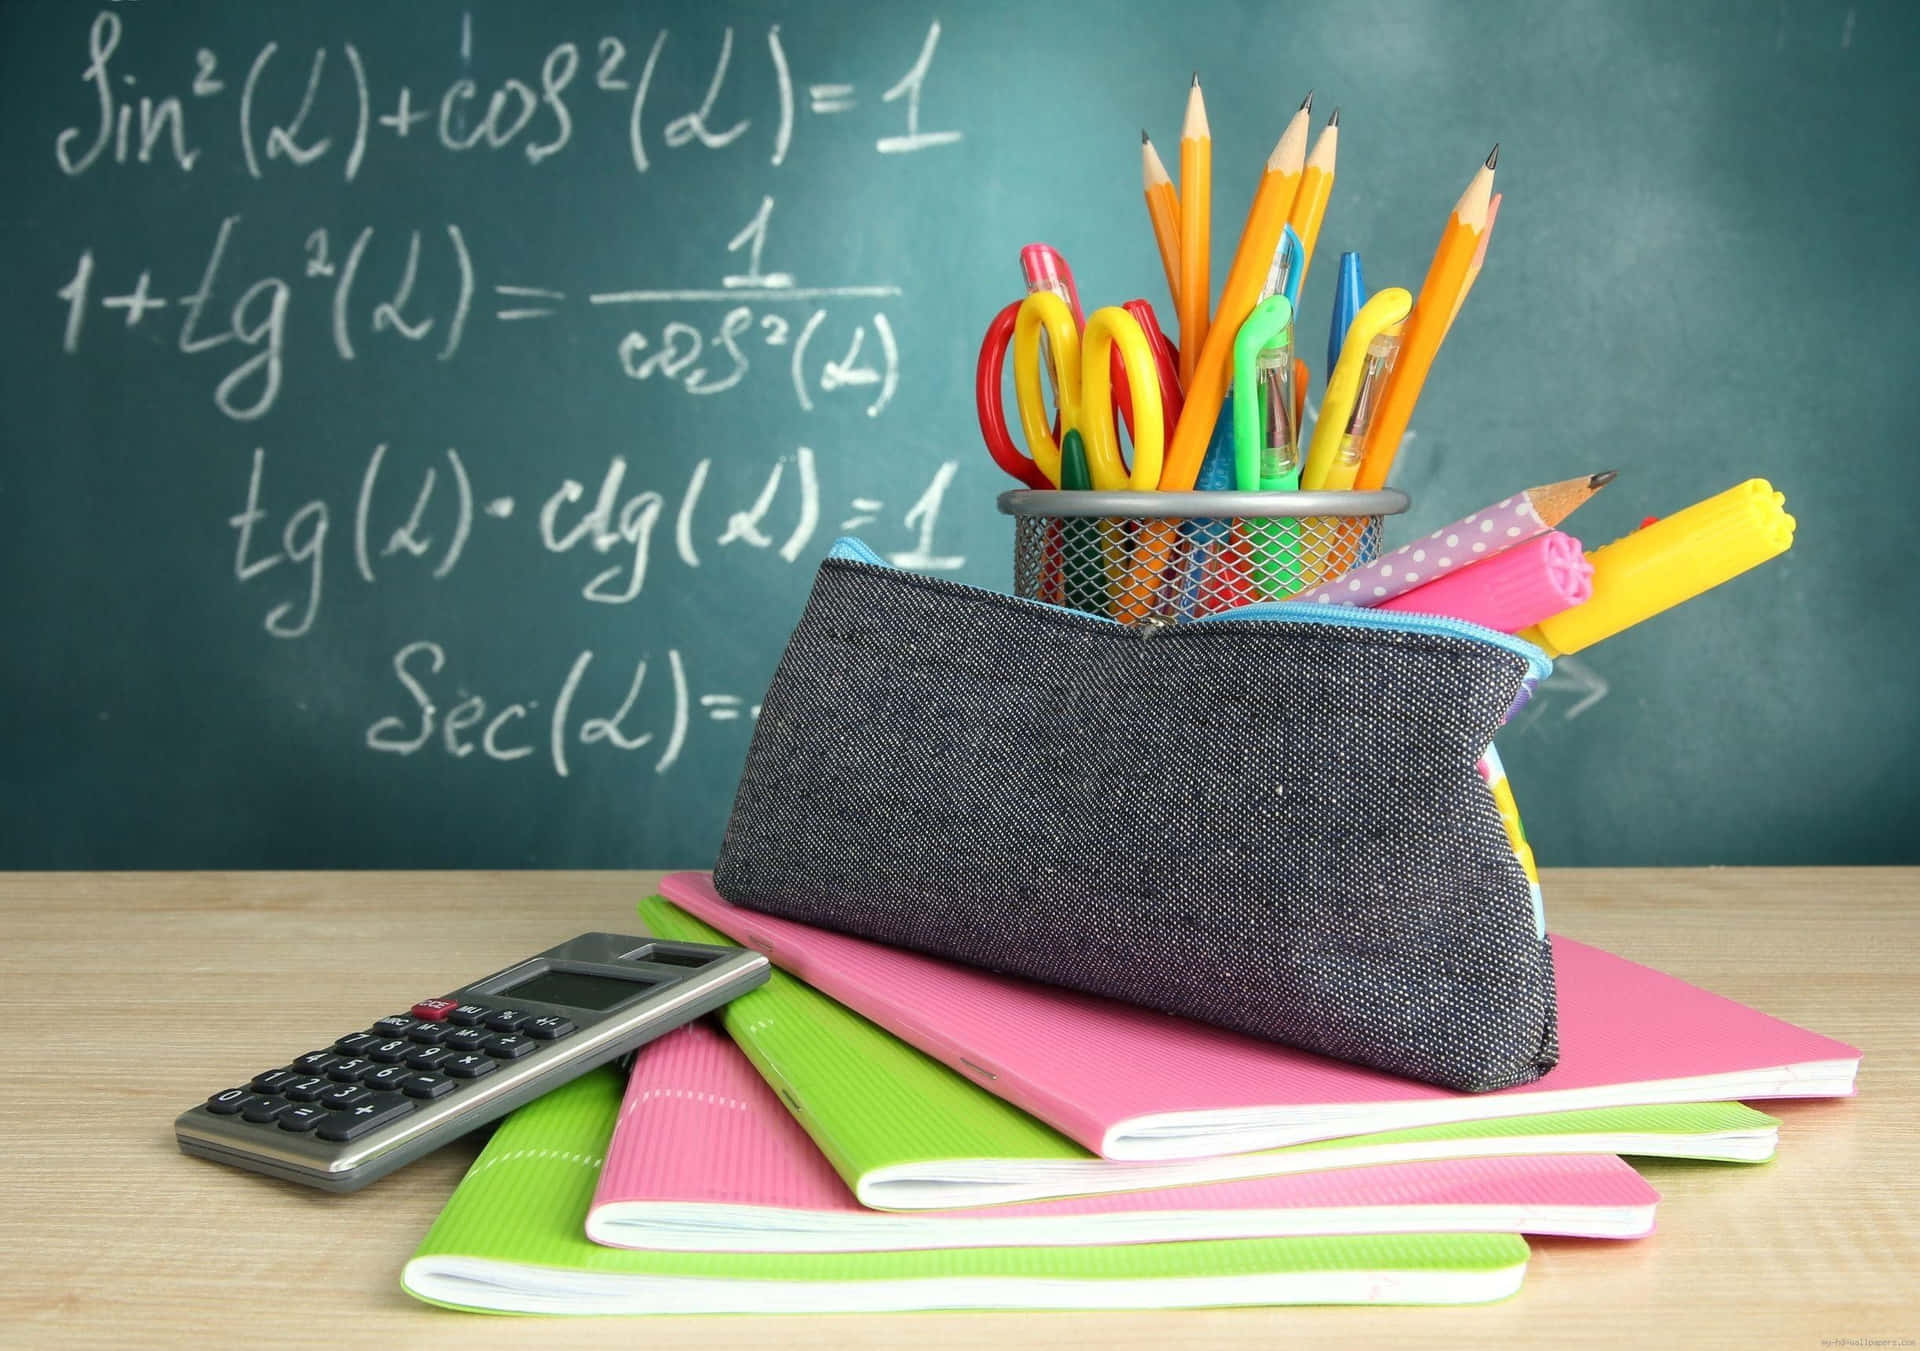 A Bag With Pencils, Pens, And A Calculator